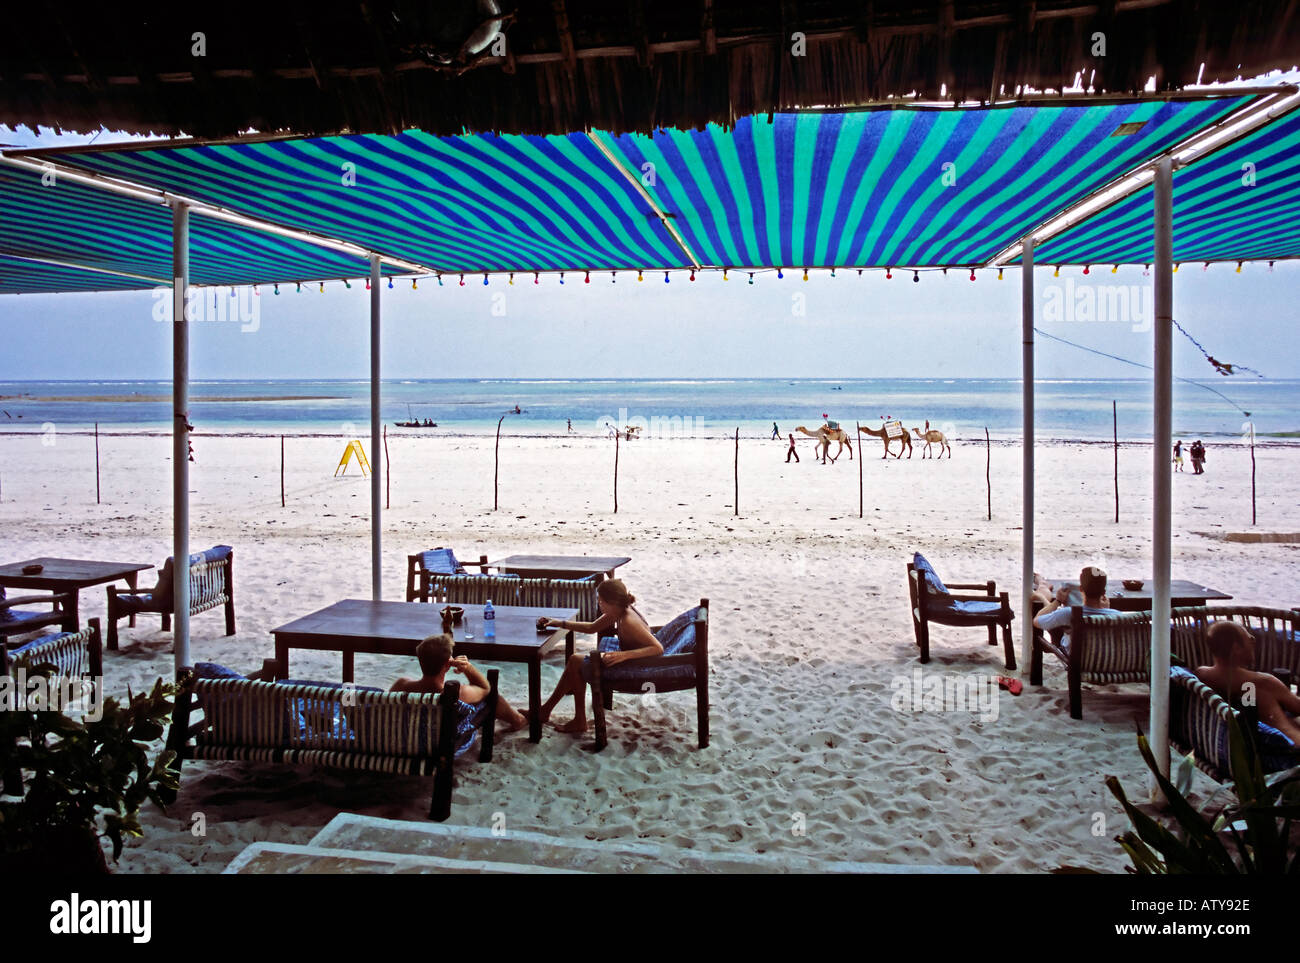 AFRICA KENYA DIANI BEACH Diani Beach bar with camels on beach Stock Photo